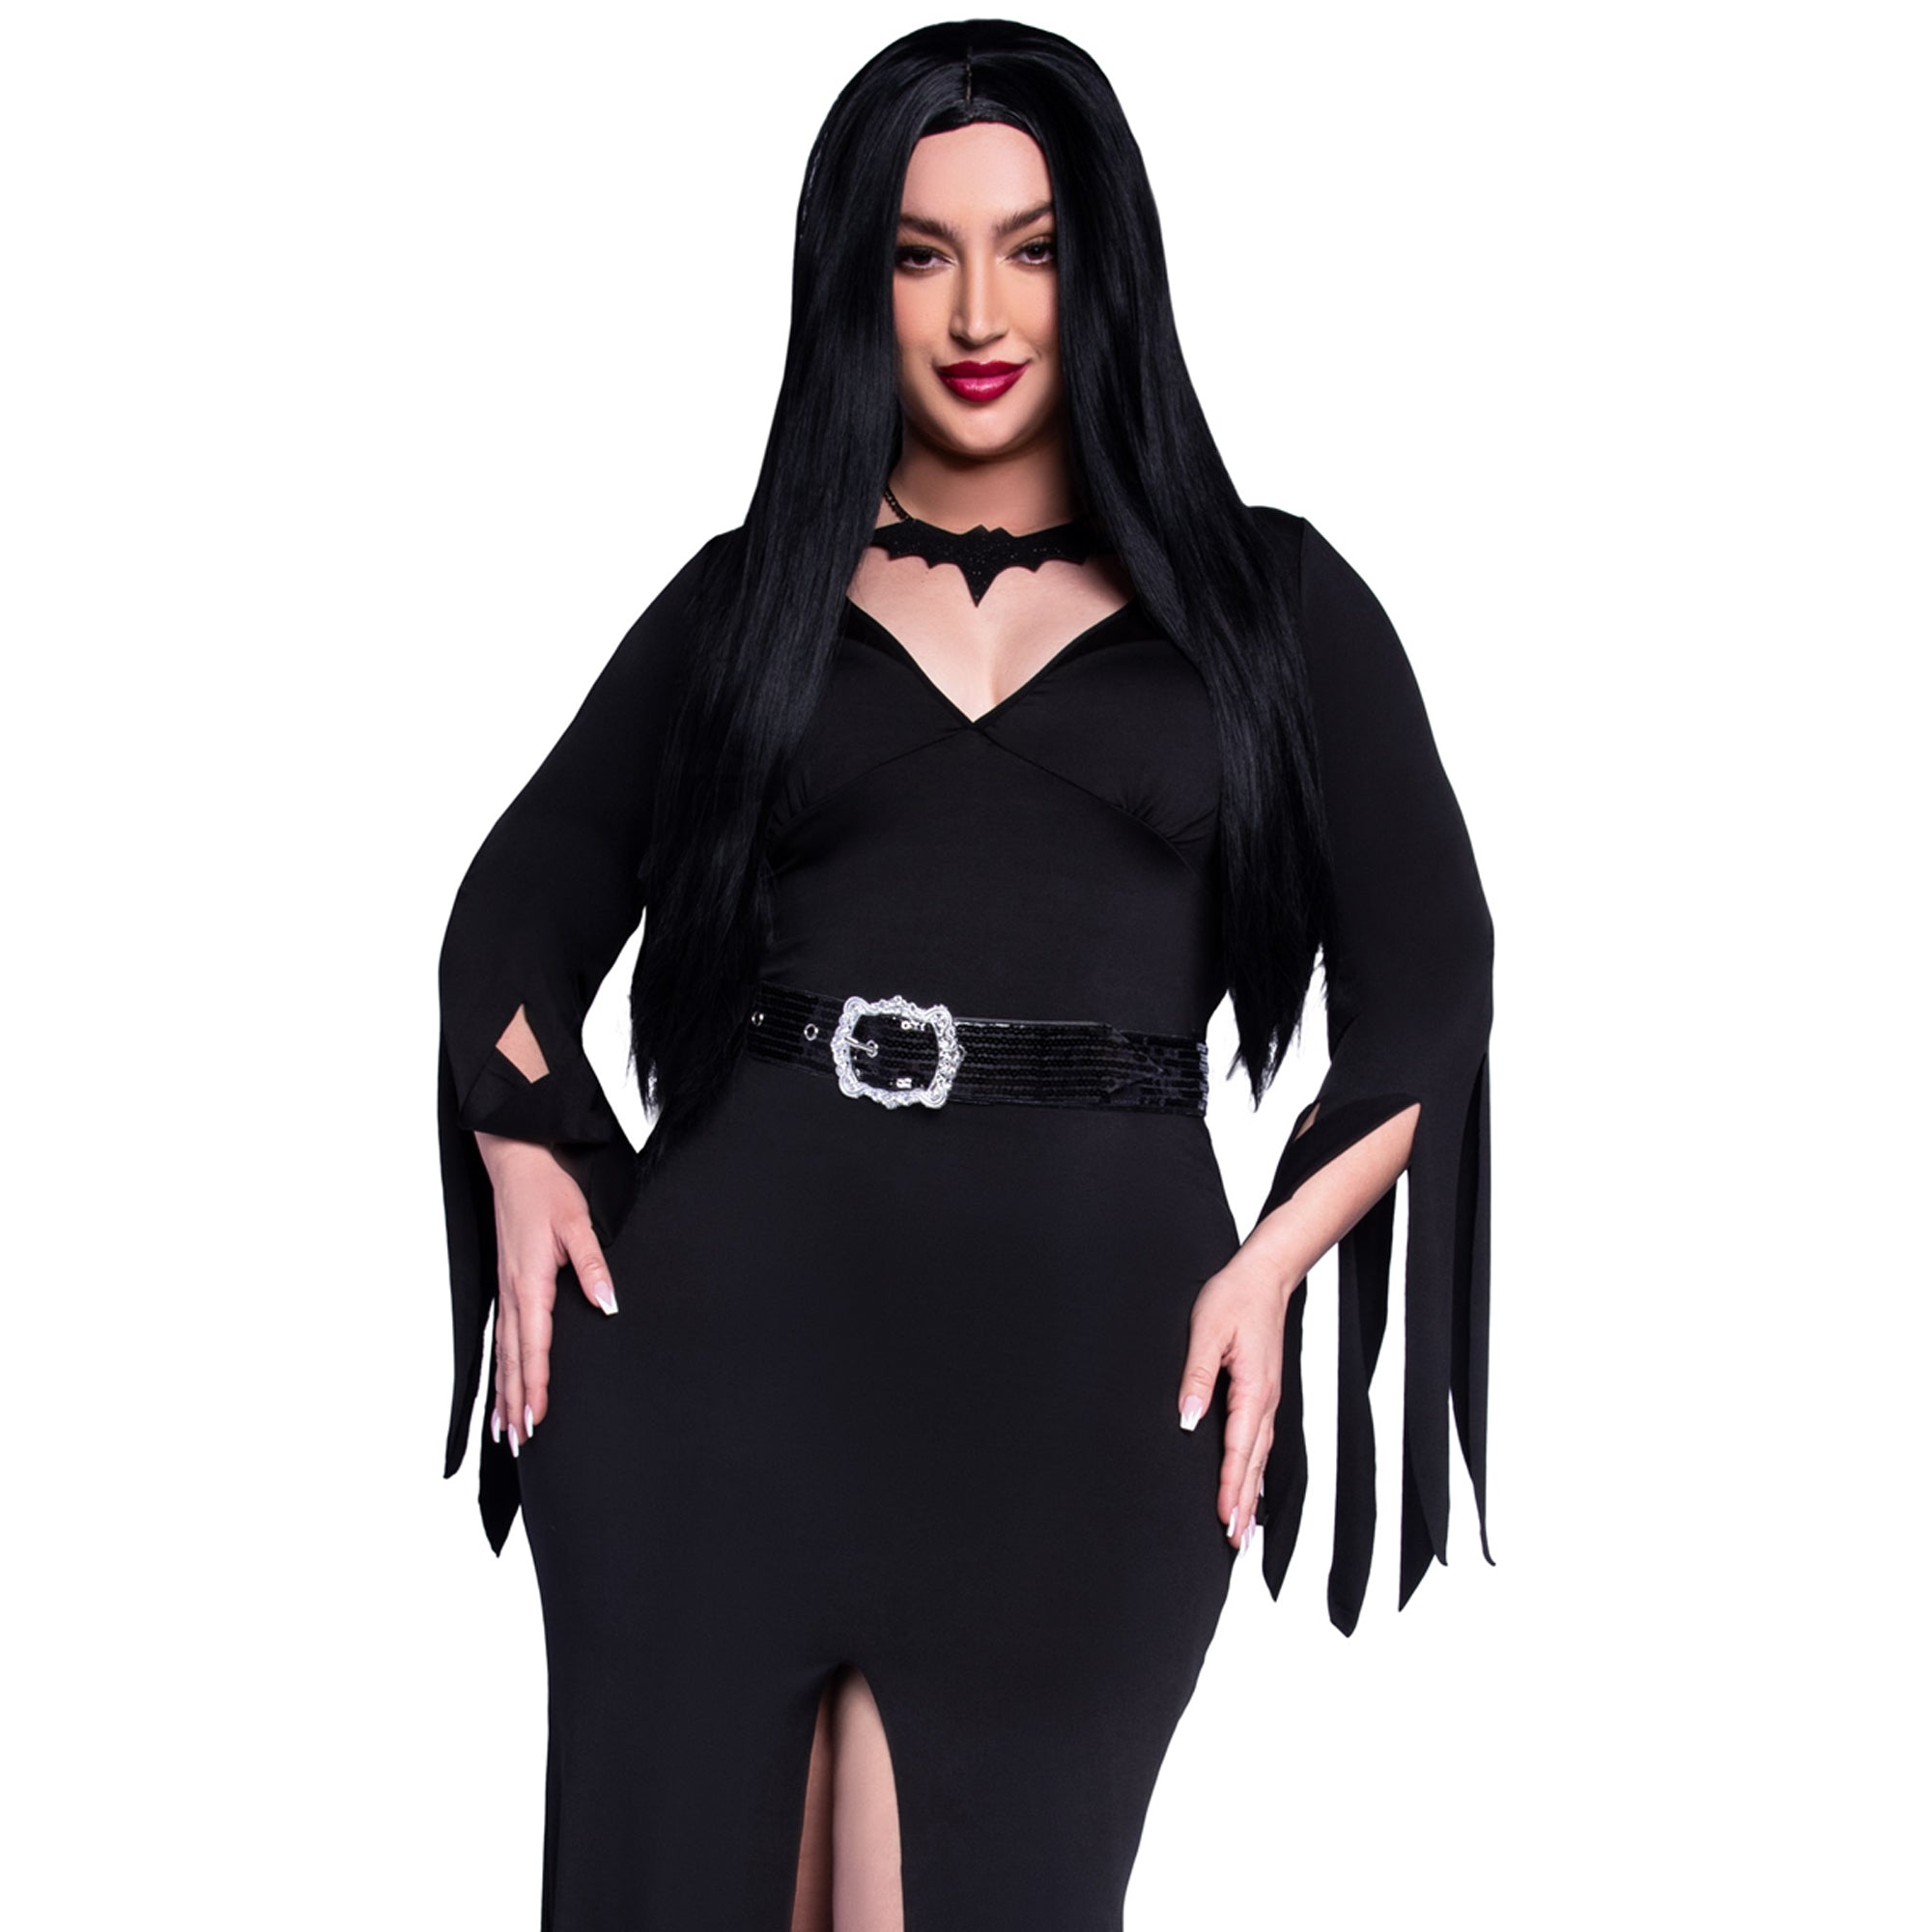 Immortal Mistress Plus Size Costume for Adults, Black Long Dress